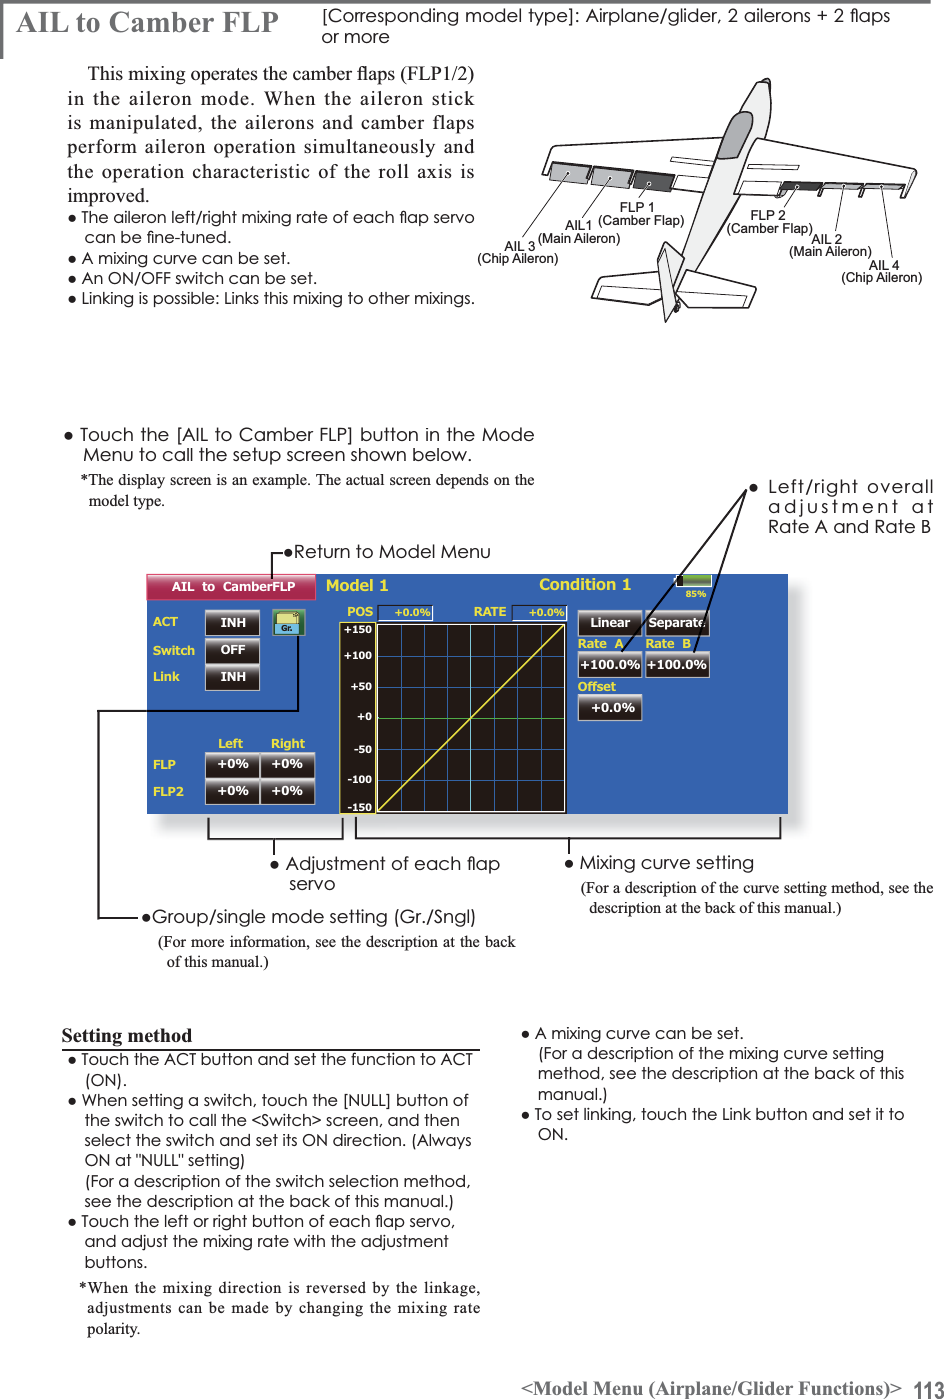 113&lt;Model Menu (Airplane/Glider Functions)&gt;AIL 3(Chip Aileron) AIL 4(Chip Aileron)AIL1(Main Aileron) AIL 2(Main Aileron)FLP 2(Camber Flap)FLP 1(Camber Flap)85%AIL  to  CamberFLPINH POS +0.0%SwitchLinkACTLeft RightLinear Separate+100.0% +100.0%Model 1 Condition 1Gr. +150+100+50+0-50-150-100RATERate  A+0.0%2íVHWRate  B+0.0%INHOFFFLPFLP2+0% +0%+0% +0%ŏ5HWXUQWR0RGHO0HQX$,/WR&amp;DPEHU)/3&gt;&amp;RUUHVSRQGLQJPRGHOW\SH@$LUSODQHJOLGHUDLOHURQVÁDSVor more7KLVPL[LQJRSHUDWHVWKHFDPEHUÀDSV)/3in the aileron mode. When the aileron stick is manipulated, the ailerons and camber flapsperform aileron operation simultaneously and the operation characteristic of the roll axis is improved.ŏ7KHDLOHURQOHIWULJKWPL[LQJUDWHRIHDFKÁDSVHUYRFDQEHÀQHWXQHGŏ$PL[LQJFXUYHFDQEHVHWŏ$Q212))VZLWFKFDQEHVHWŏ/LQNLQJLVSRVVLEOH/LQNVWKLVPL[LQJWRRWKHUPL[LQJVŏ7RXFKWKH&gt;$,/WR&amp;DPEHU)/3@EXWWRQLQWKH0RGHMenu to call the setup screen shown below.*The display screen is an example. The actual screen depends on the model type.ŏ0L[LQJFXUYHVHWWLQJ(For a description of the curve setting method, see the description at the back of this manual.)ŏ$GMXVWPHQWRIHDFKÁDSservoŏ*URXSVLQJOHPRGHVHWWLQJ*U6QJO(For more information, see the description at the back of this manual.)ŏ/HIWULJKWRYHUDOOadjustment at5DWH$DQG5DWH%6HWWLQJPHWKRGŏ7RXFKWKH$&amp;7EXWWRQDQGVHWWKHIXQFWLRQWR$&amp;721ŏ:KHQVHWWLQJDVZLWFKWRXFKWKH&gt;18//@EXWWRQRIthe switch to call the &lt;Switch&gt; screen, and then VHOHFWWKHVZLWFKDQGVHWLWV21GLUHFWLRQ$OZD\V21DW18//VHWWLQJ(For a description of the switch selection method, see the description at the back of this manual.)ŏ7RXFKWKHOHIWRUULJKWEXWWRQRIHDFKÁDSVHUYRand adjust the mixing rate with the adjustment buttons.*When the mixing direction is reversed by the linkage,adjustments can be made by changing the mixing rate polarity.ŏ$PL[LQJFXUYHFDQEHVHW(For a description of the mixing curve setting method, see the description at the back of this manual.)ŏ7RVHWOLQNLQJWRXFKWKH/LQNEXWWRQDQGVHWLWWR21A